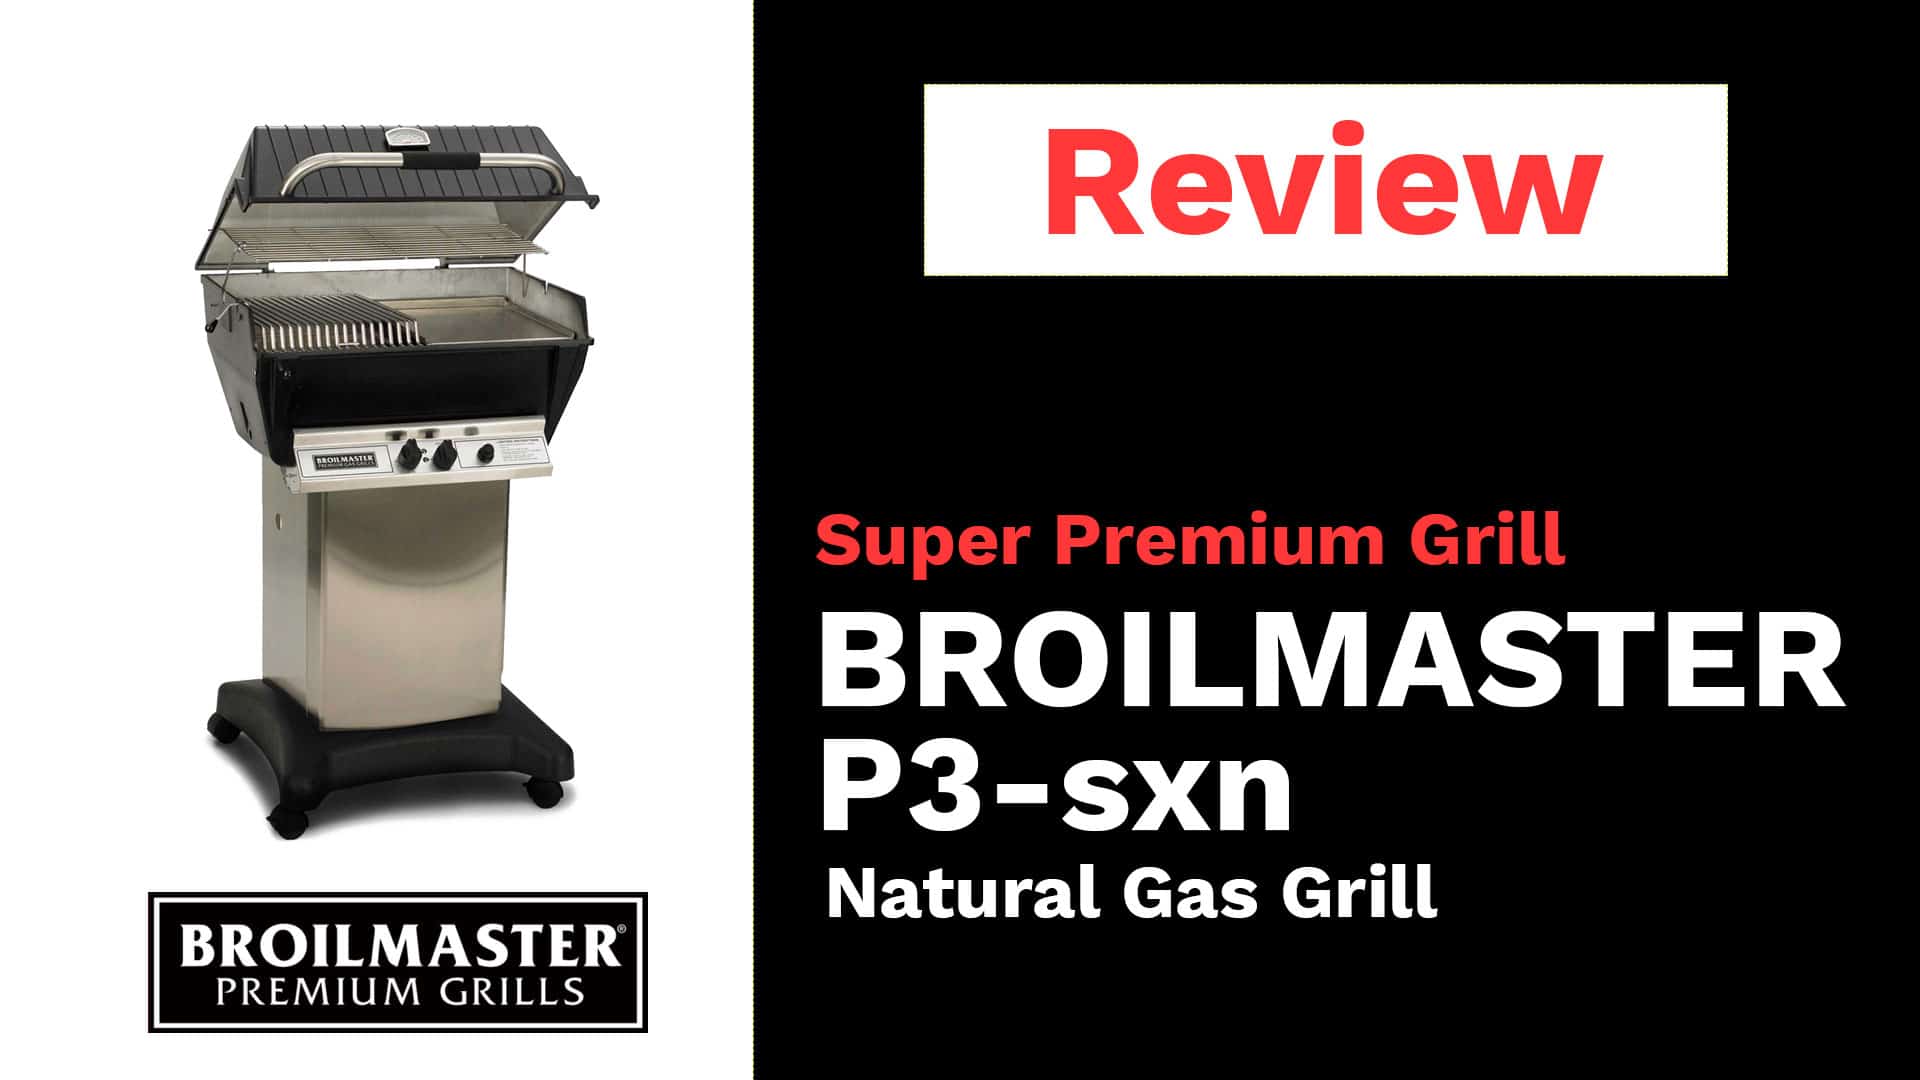 Broilmaster-P3-sxn-Super-Premium-Gas-Grill-Reviews